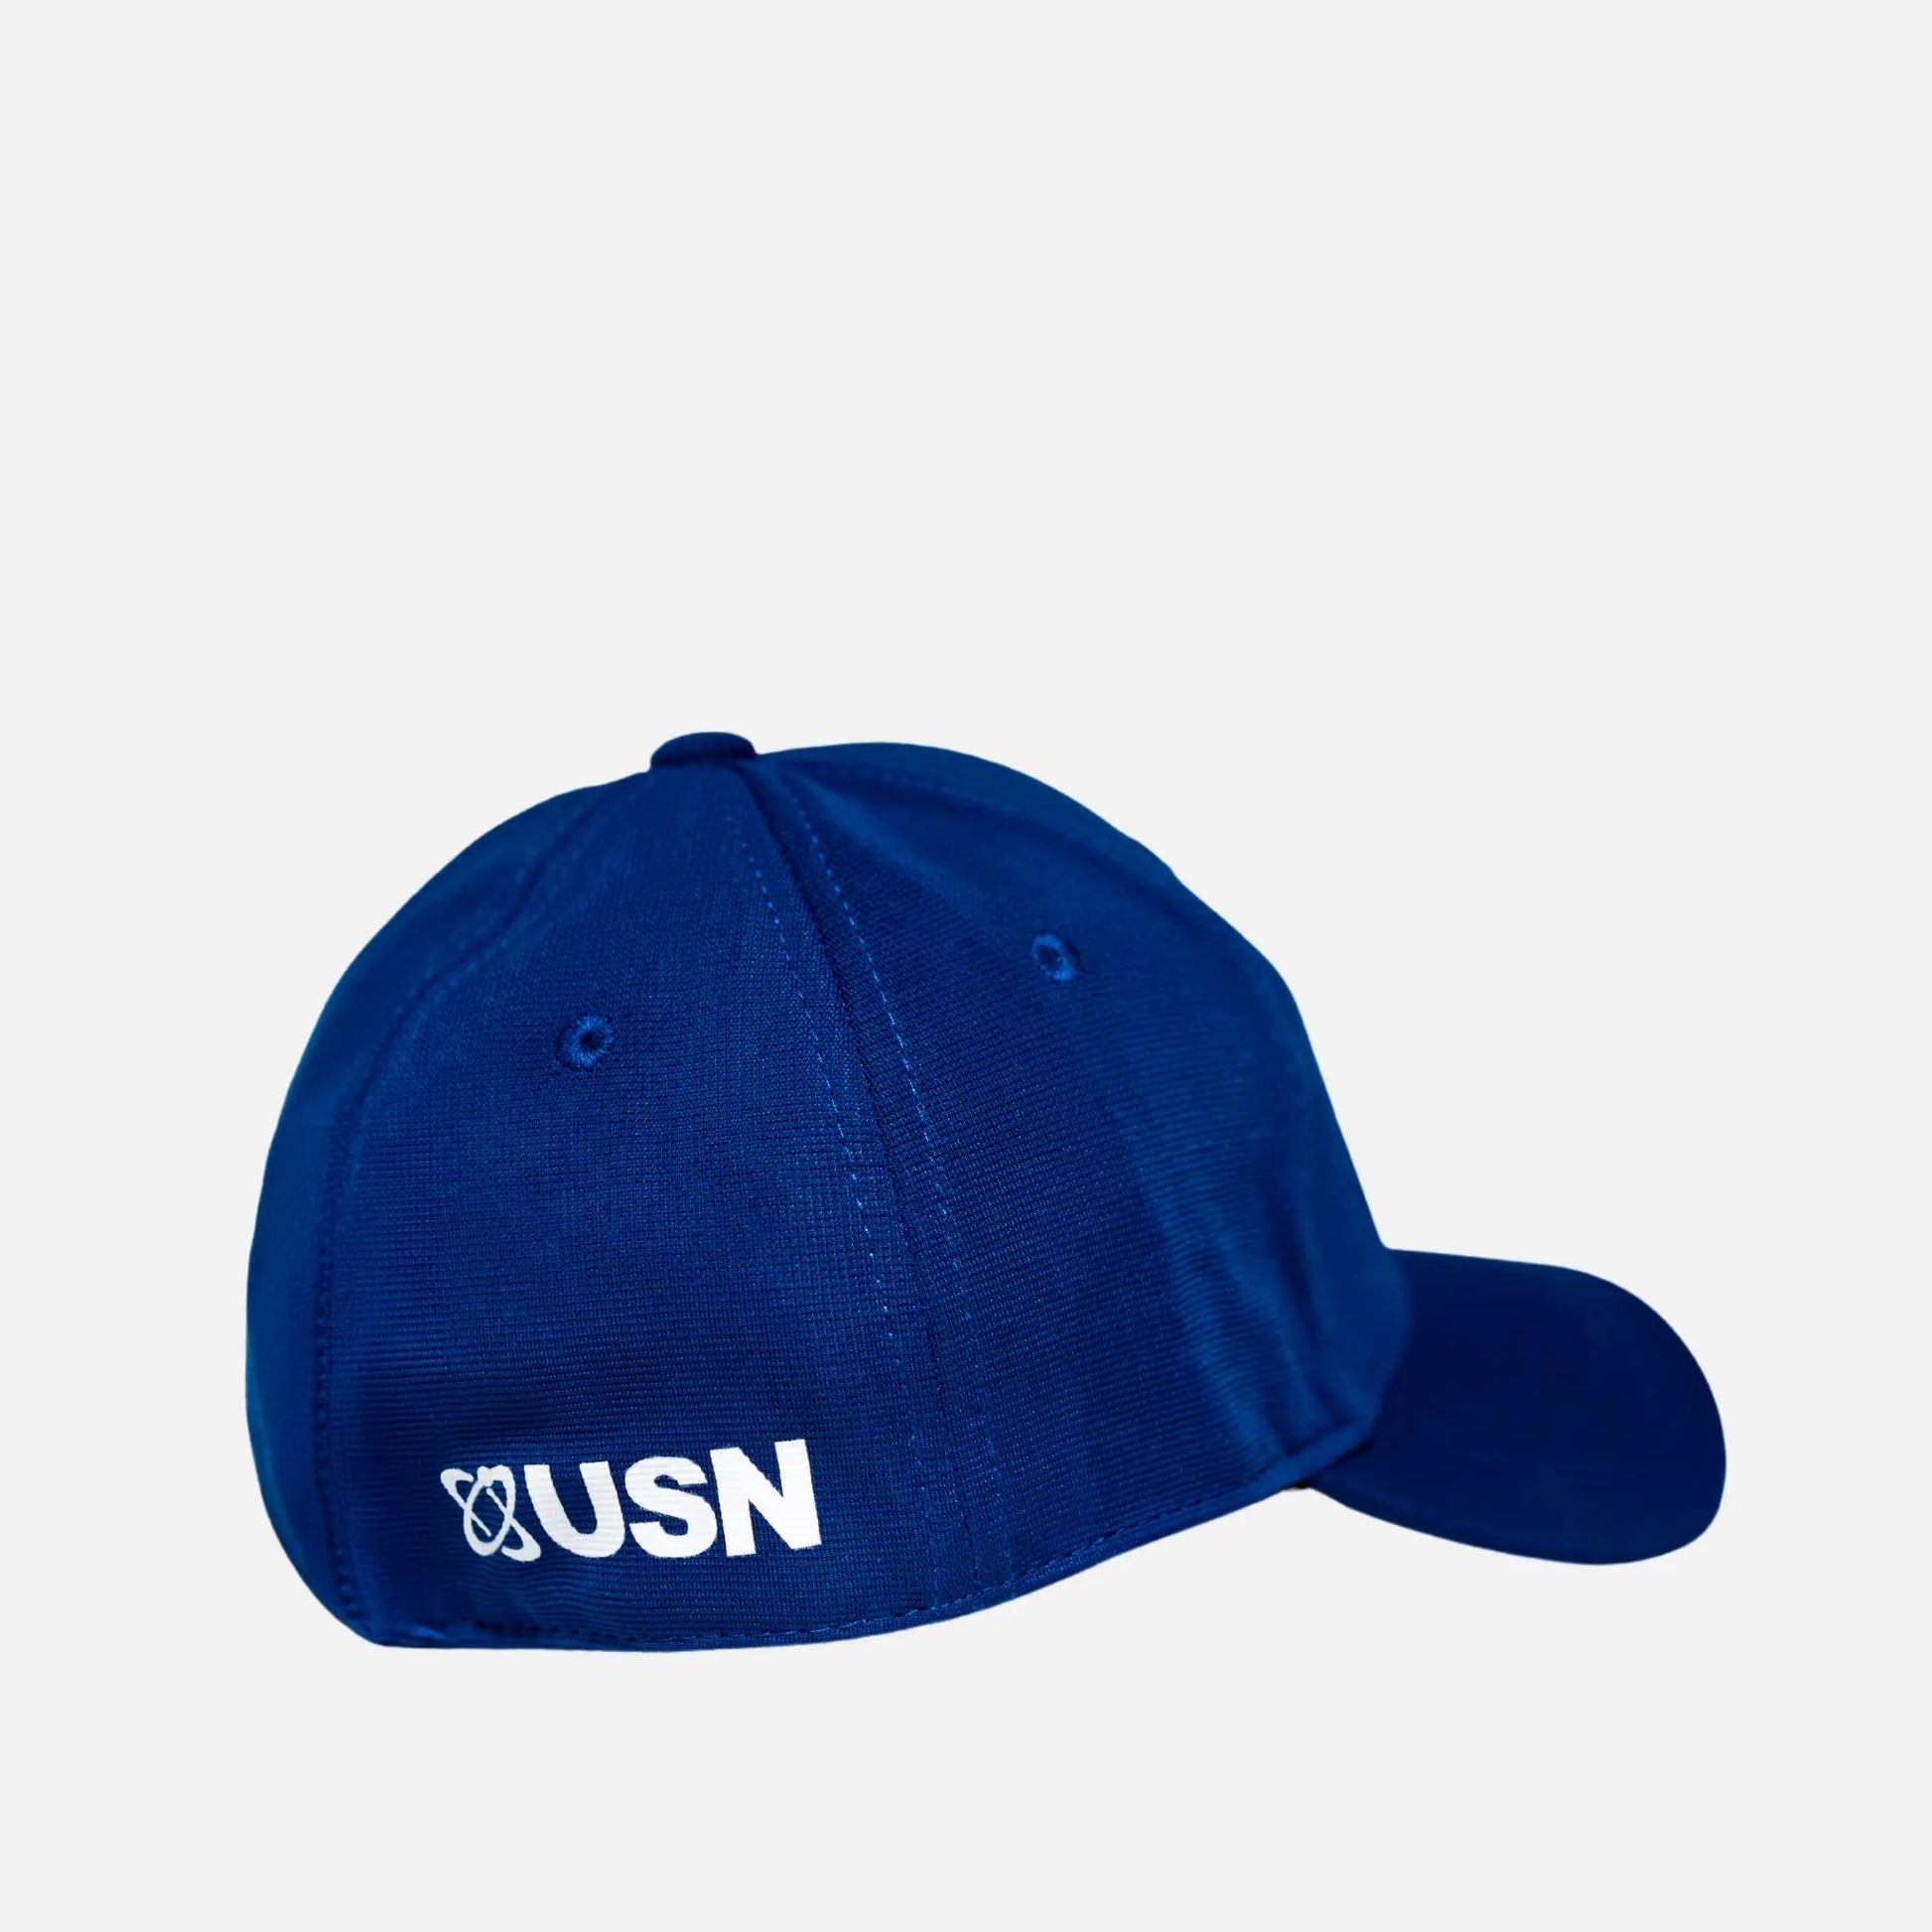 usn-flexfit-cap-back-blue-royal